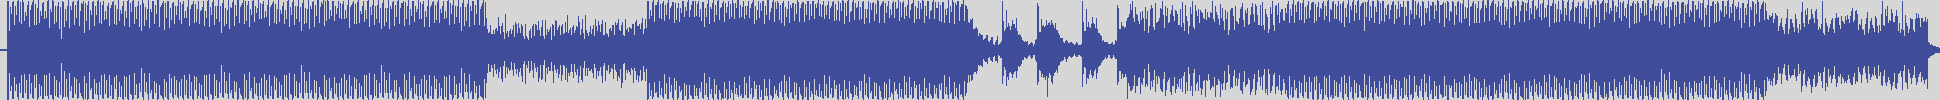 nf_boyz_records [NFY066] Lazy Shame - Skadeo [Vocal Republic Mix] audio wave form